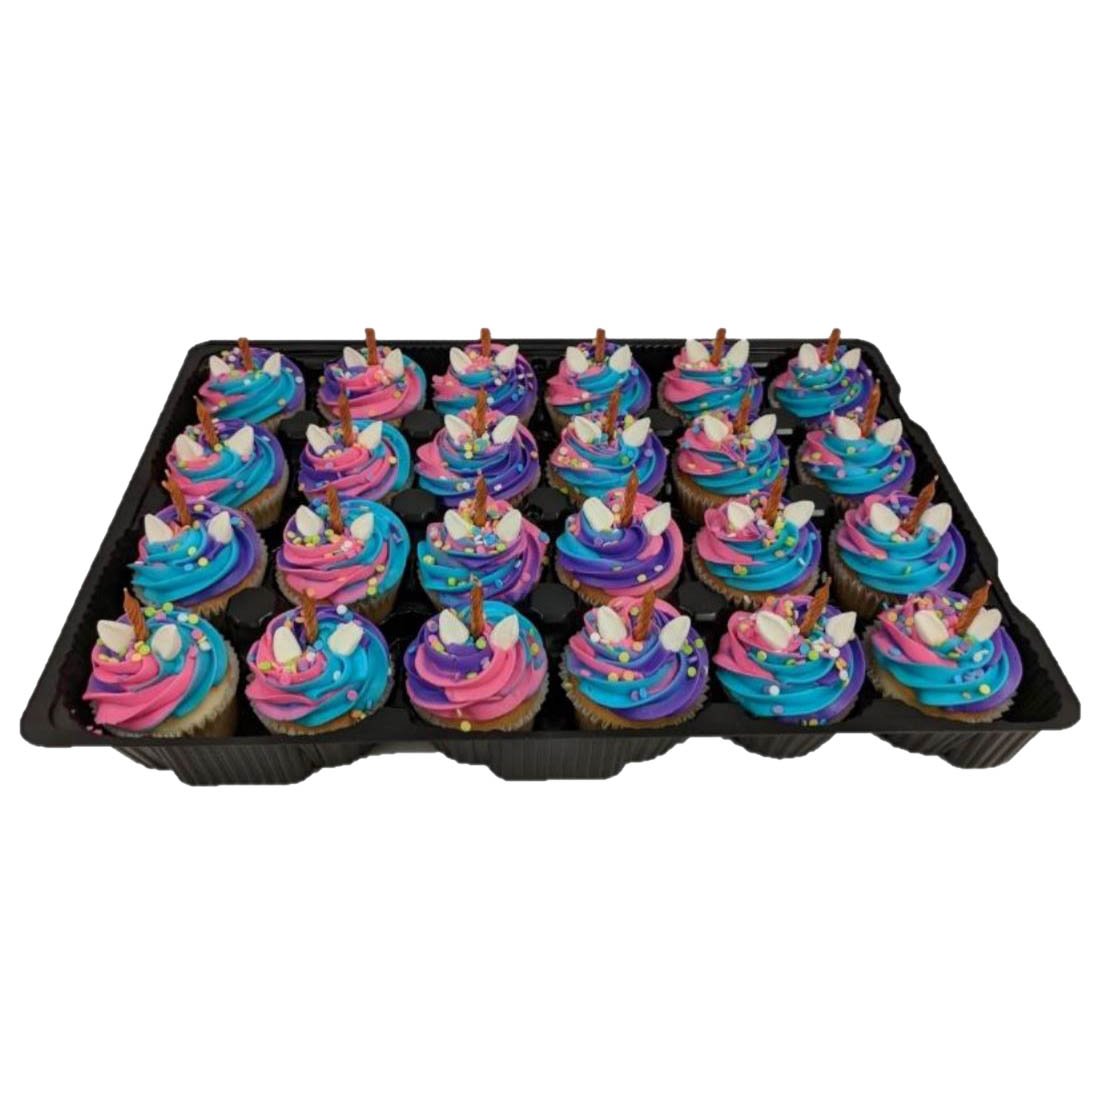 Rainbow Unicorn Cupcake Rings 24 Count 